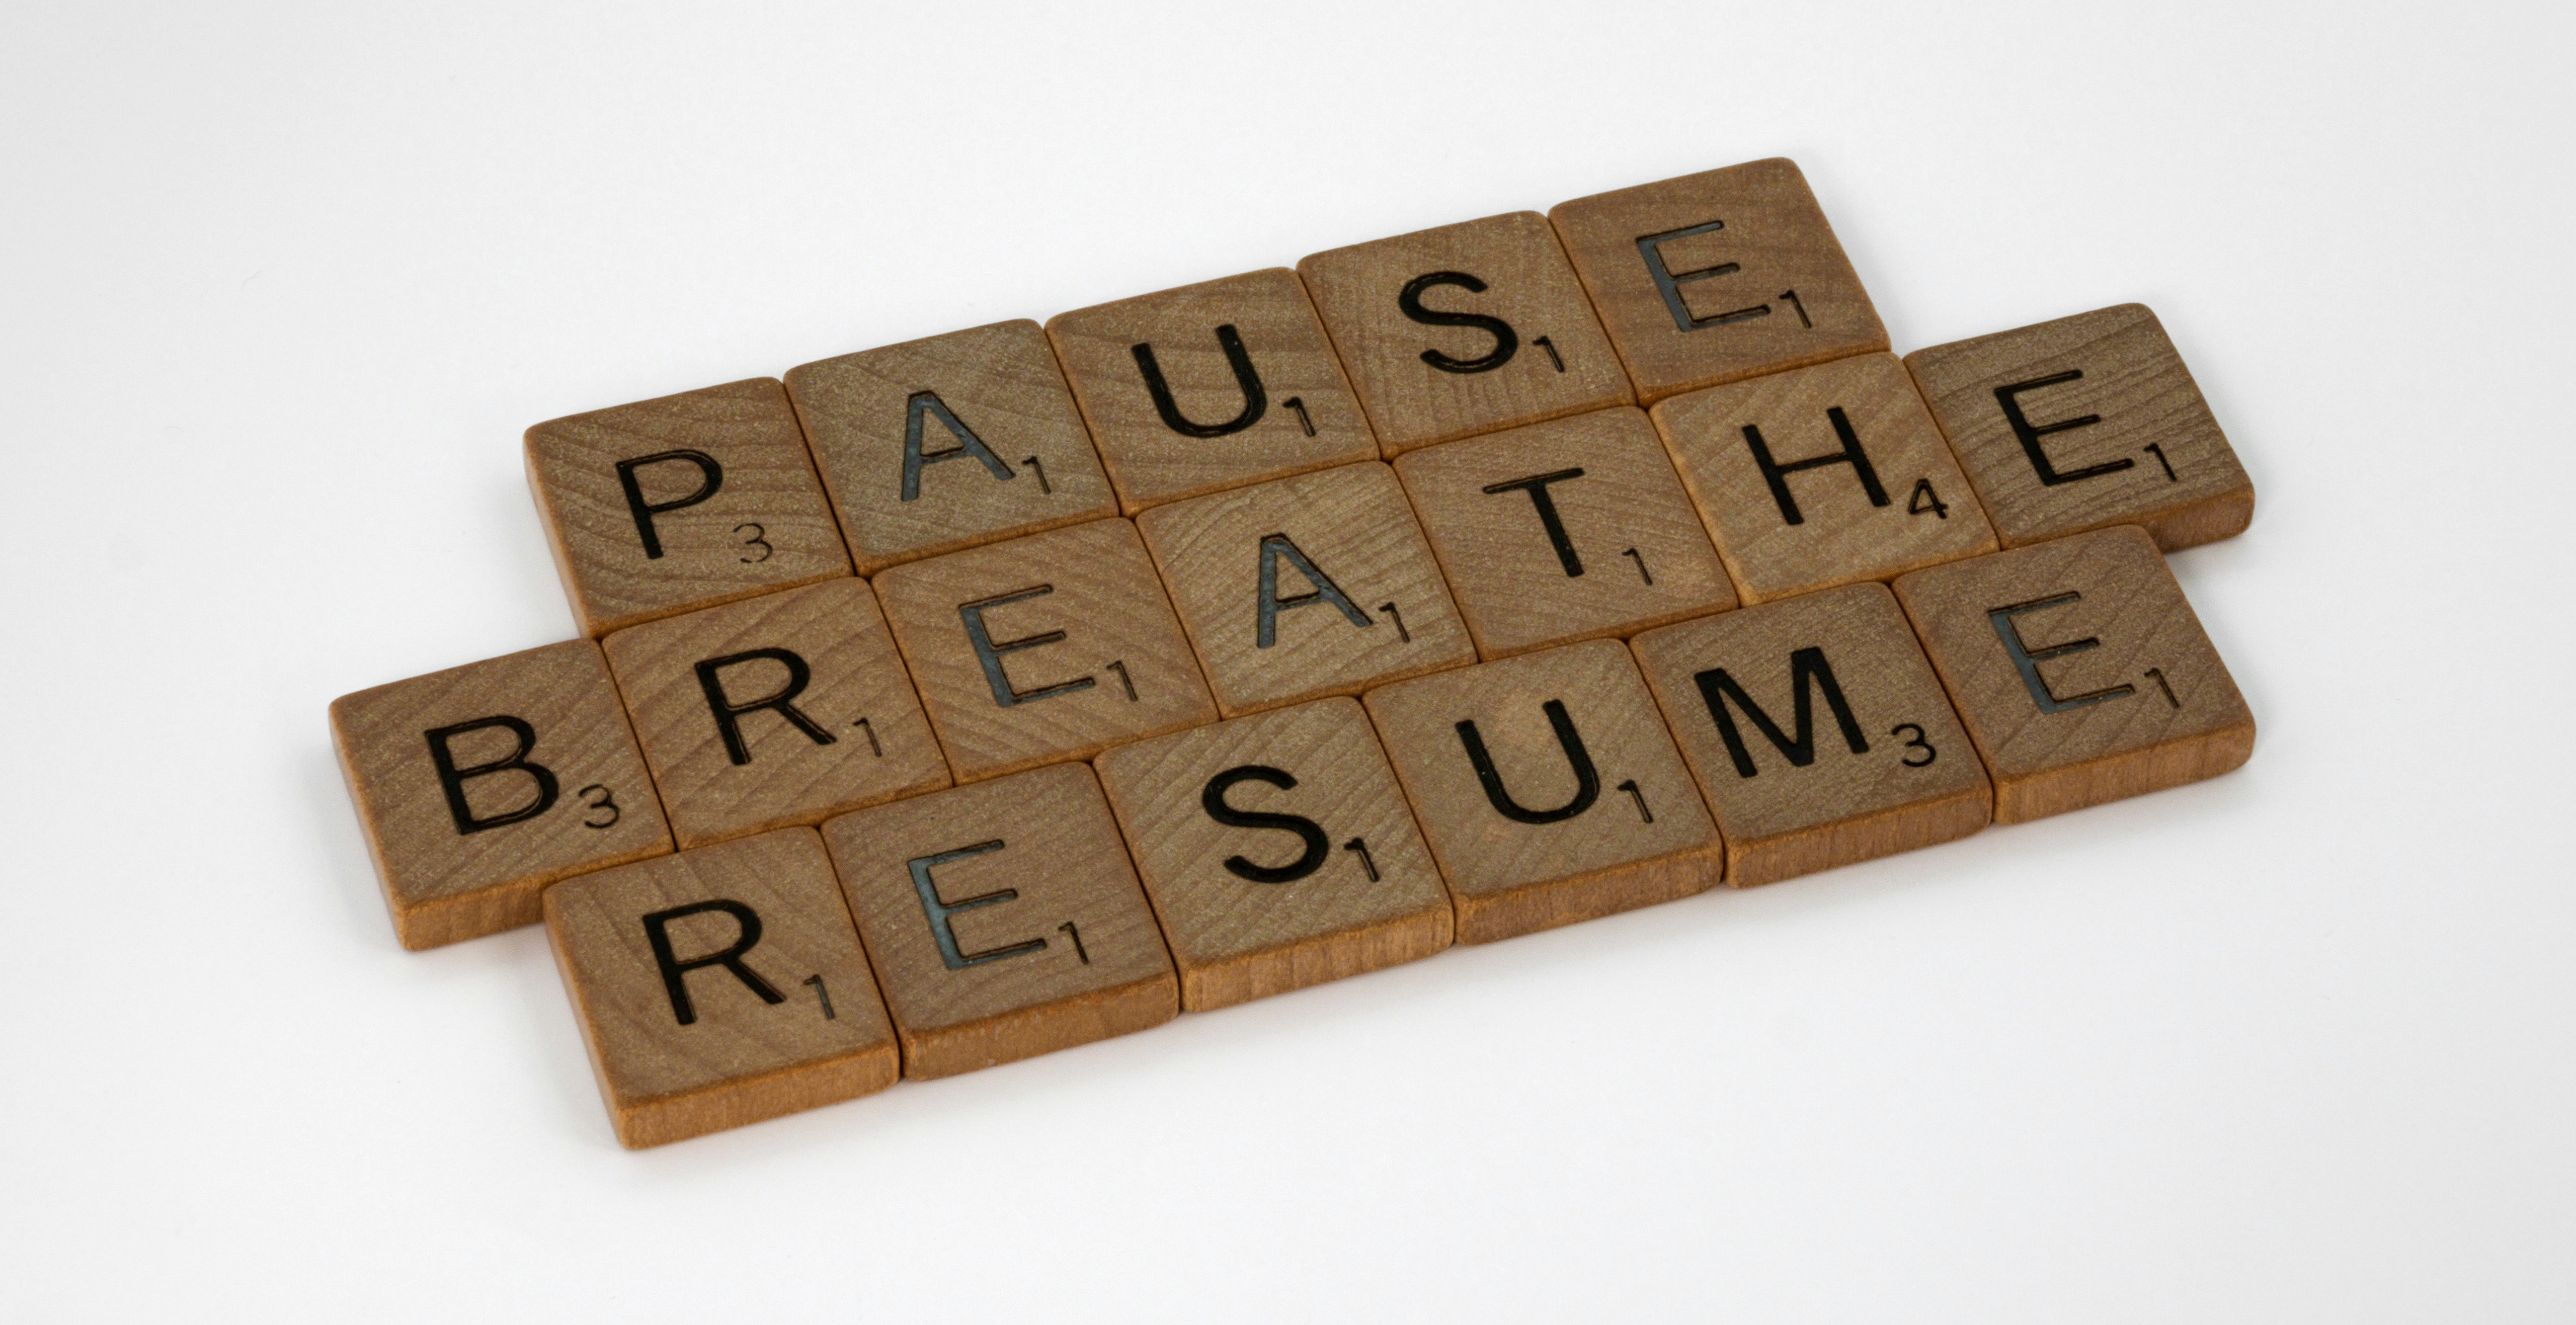 Pause Breathe Resume